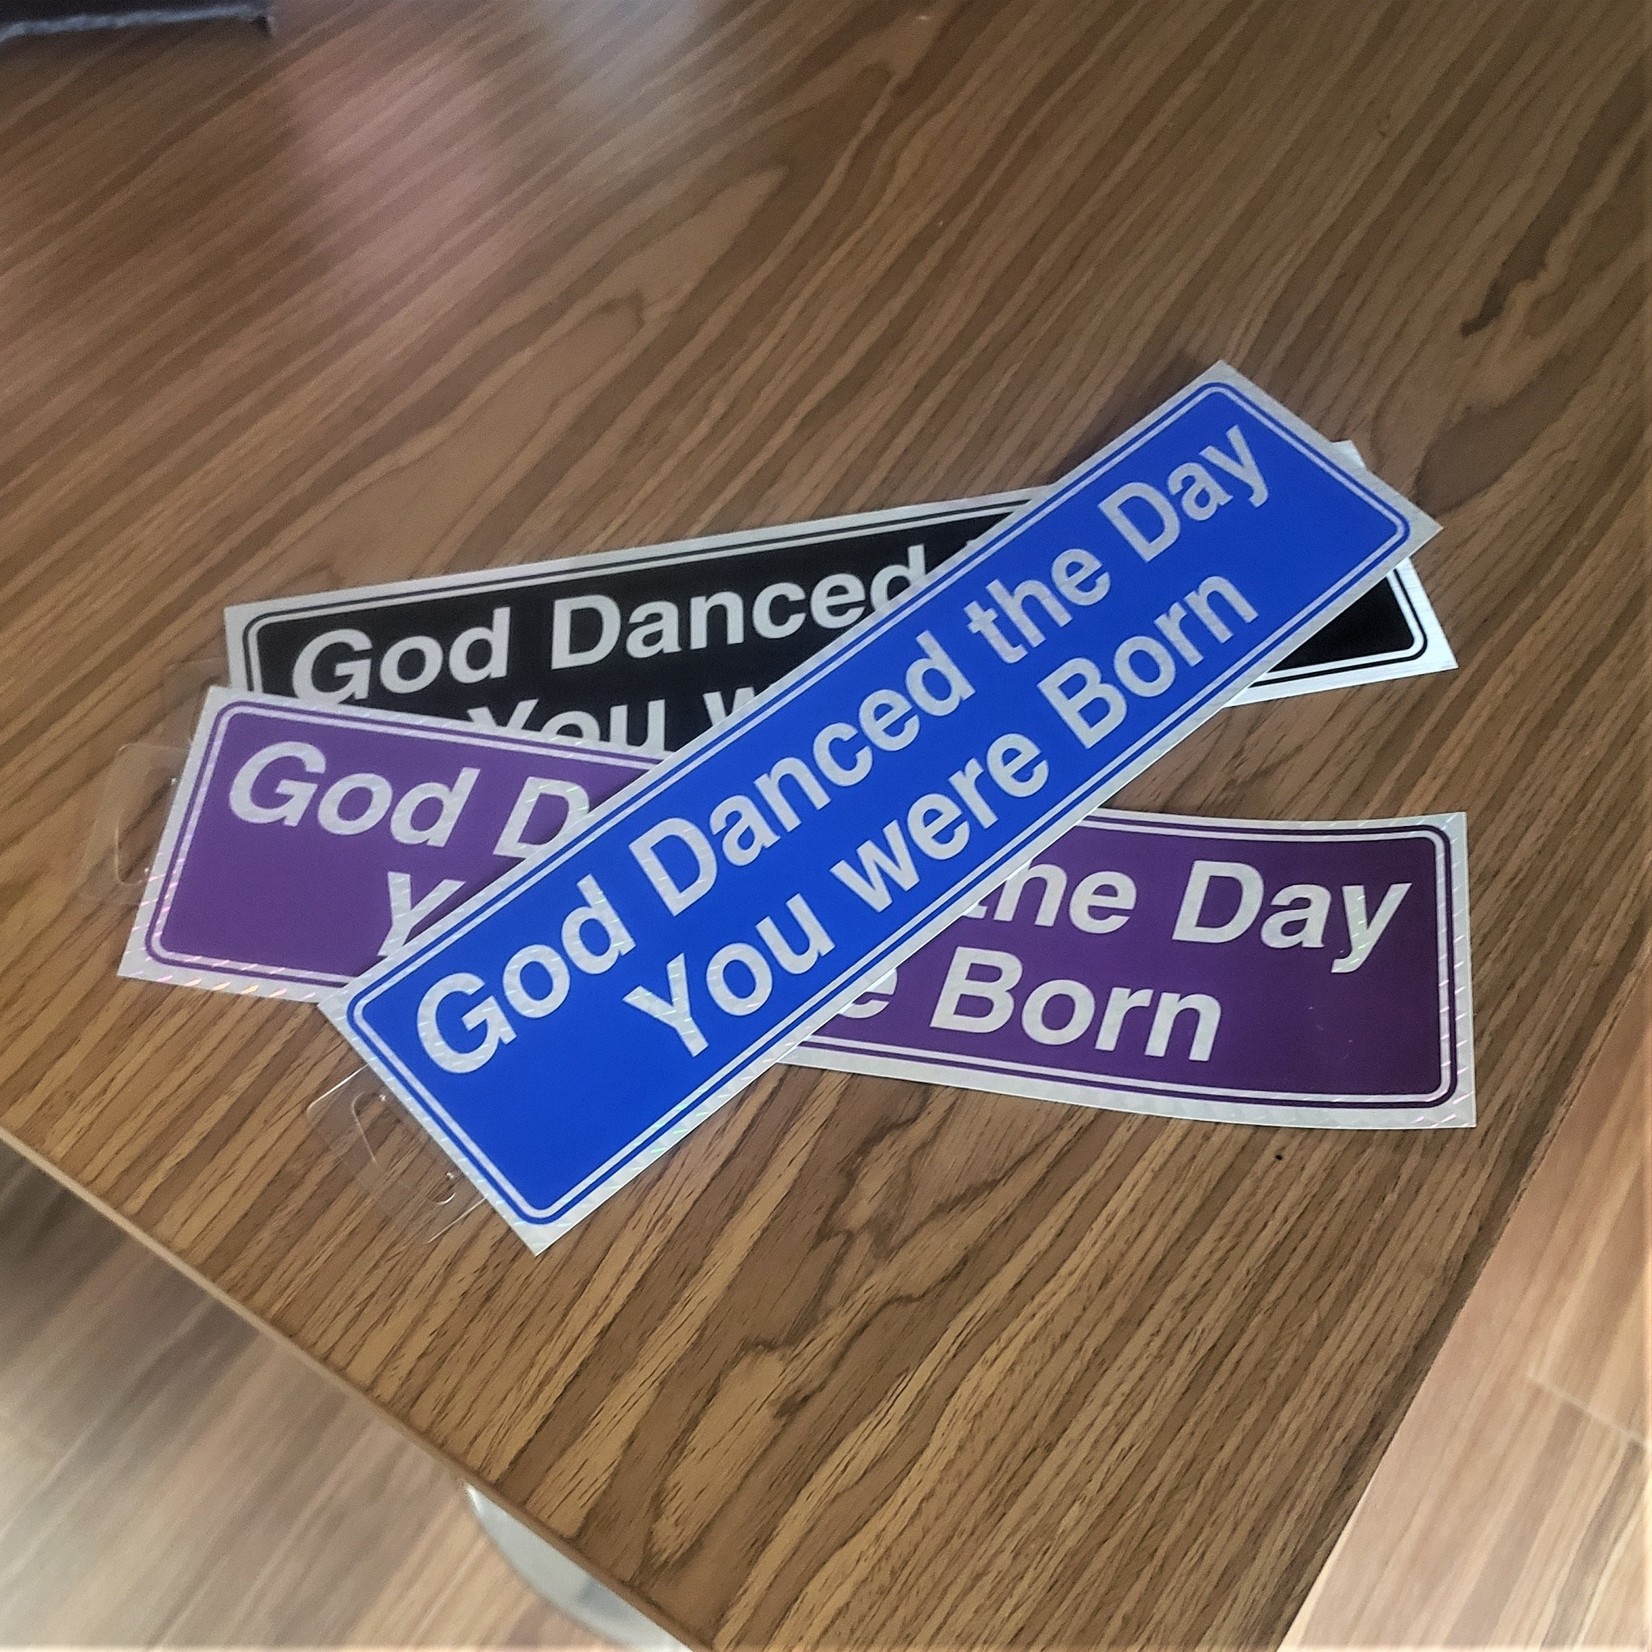 God Danced the Day You Were Born [Blue] Bumper Sticker